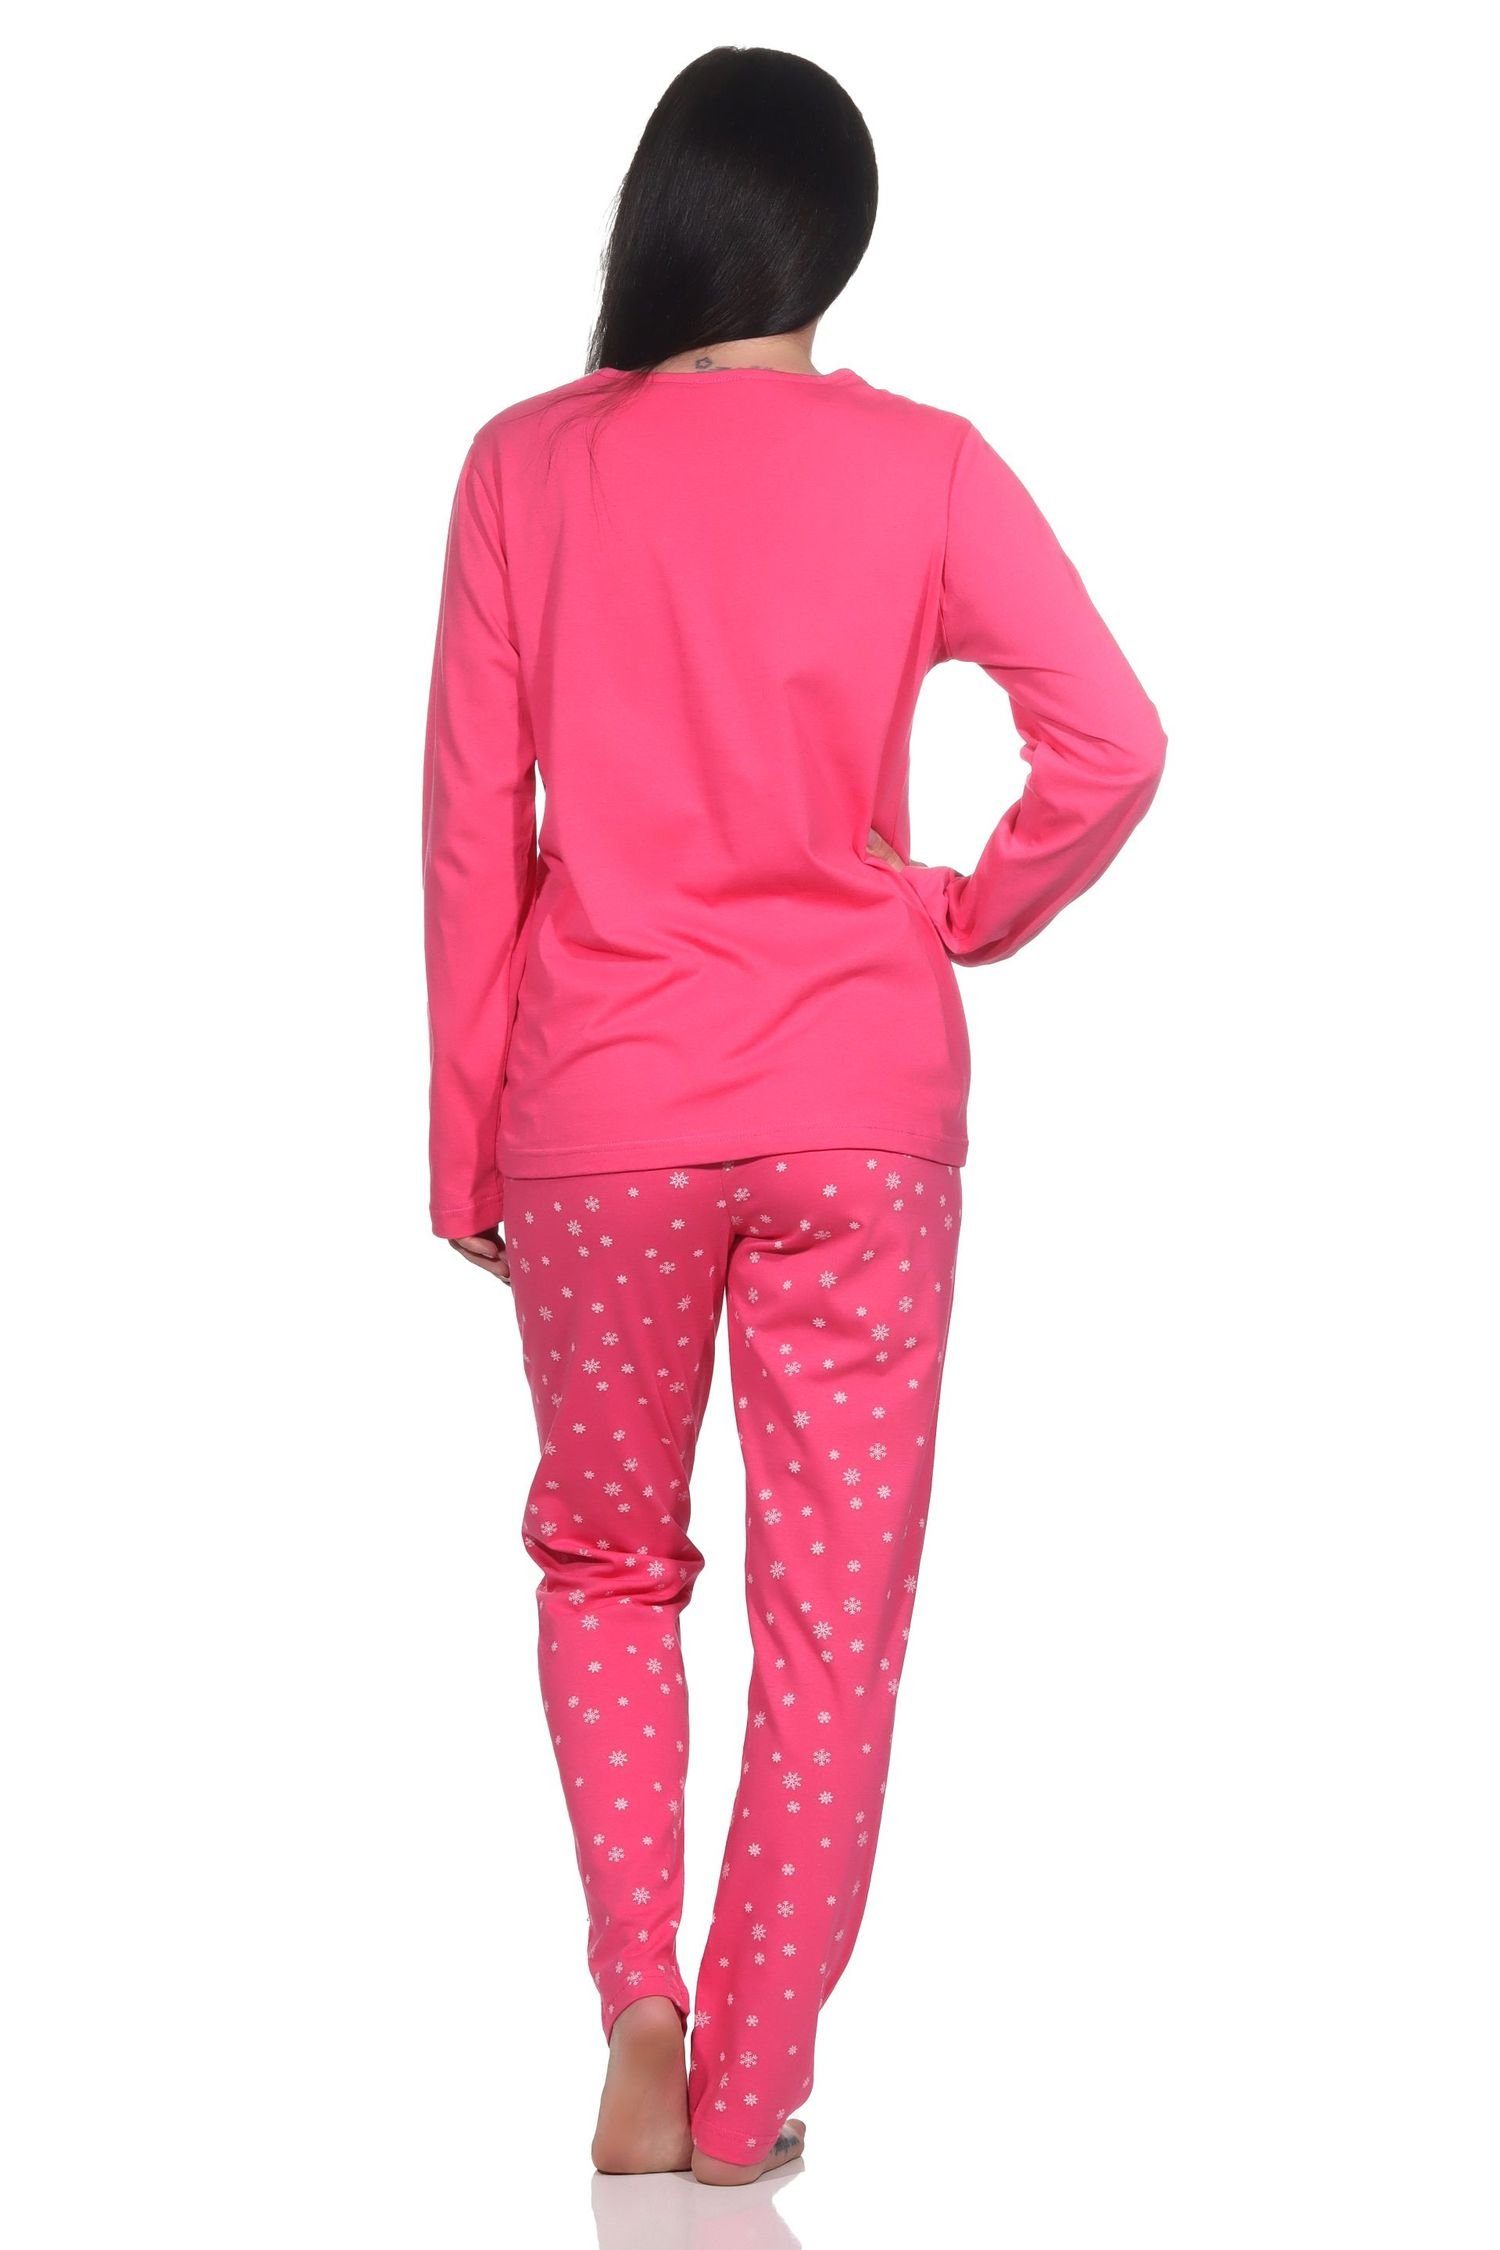 pink Normann Damen Optik wunderschöner Eiskristall Normann Schlafanzug Pyjama in langarm